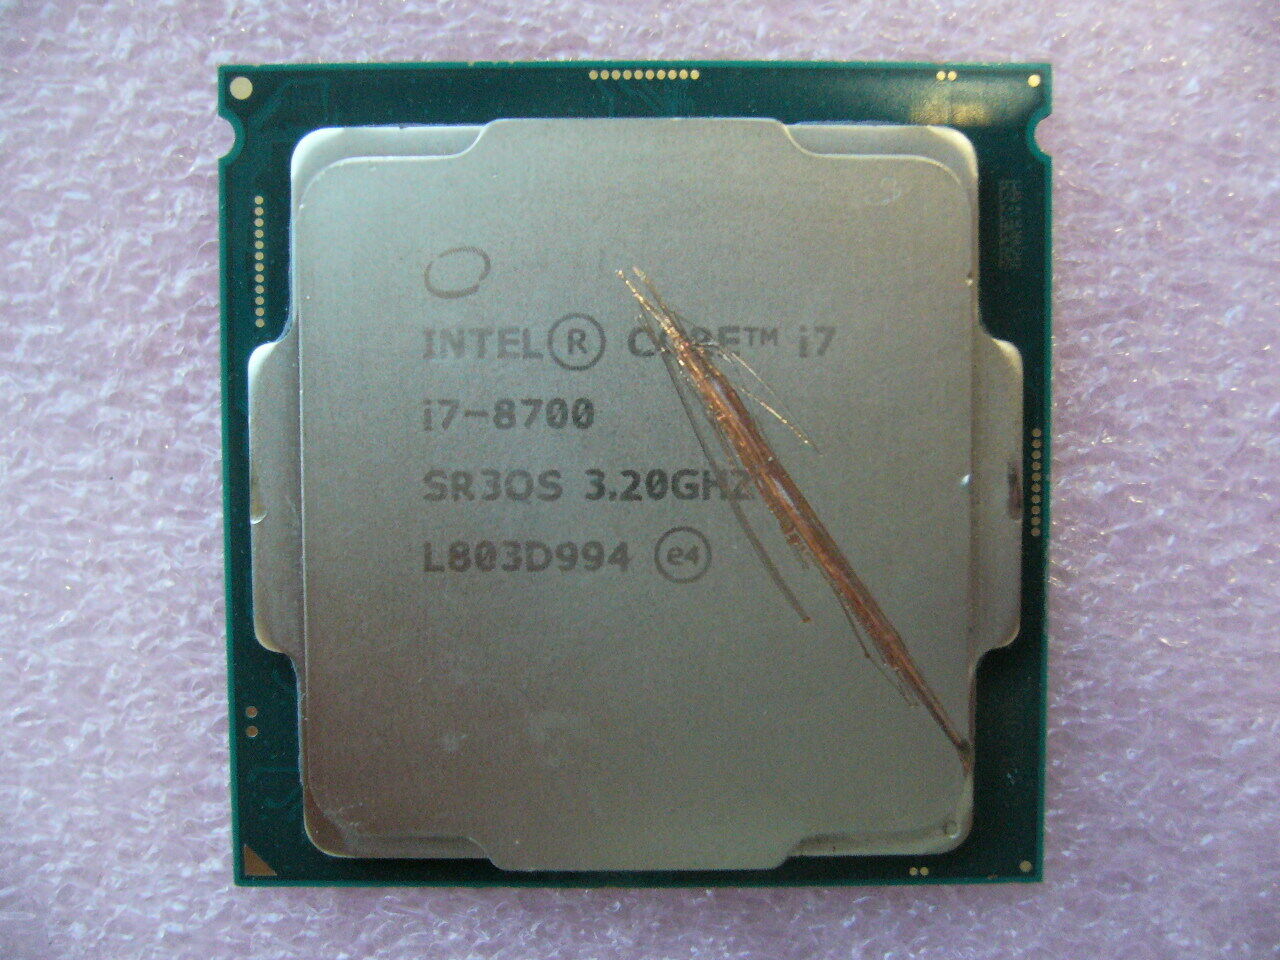 Intel CPU i7-8700 3.20Ghz LGA1151 SR3QS